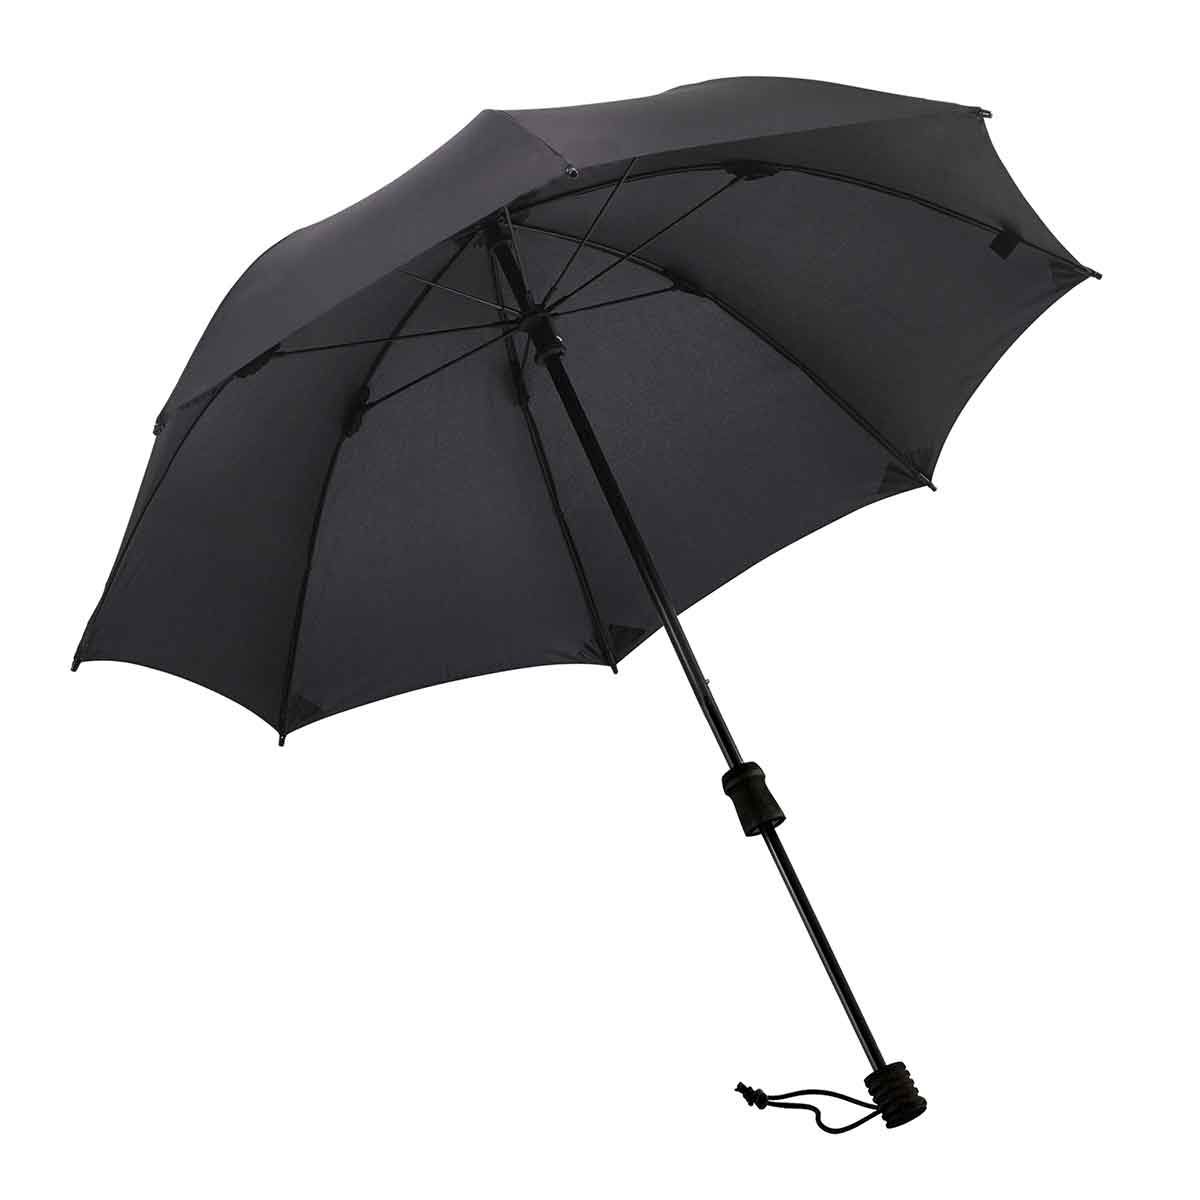 Euroschirm Swing Hands-Free Umbrella